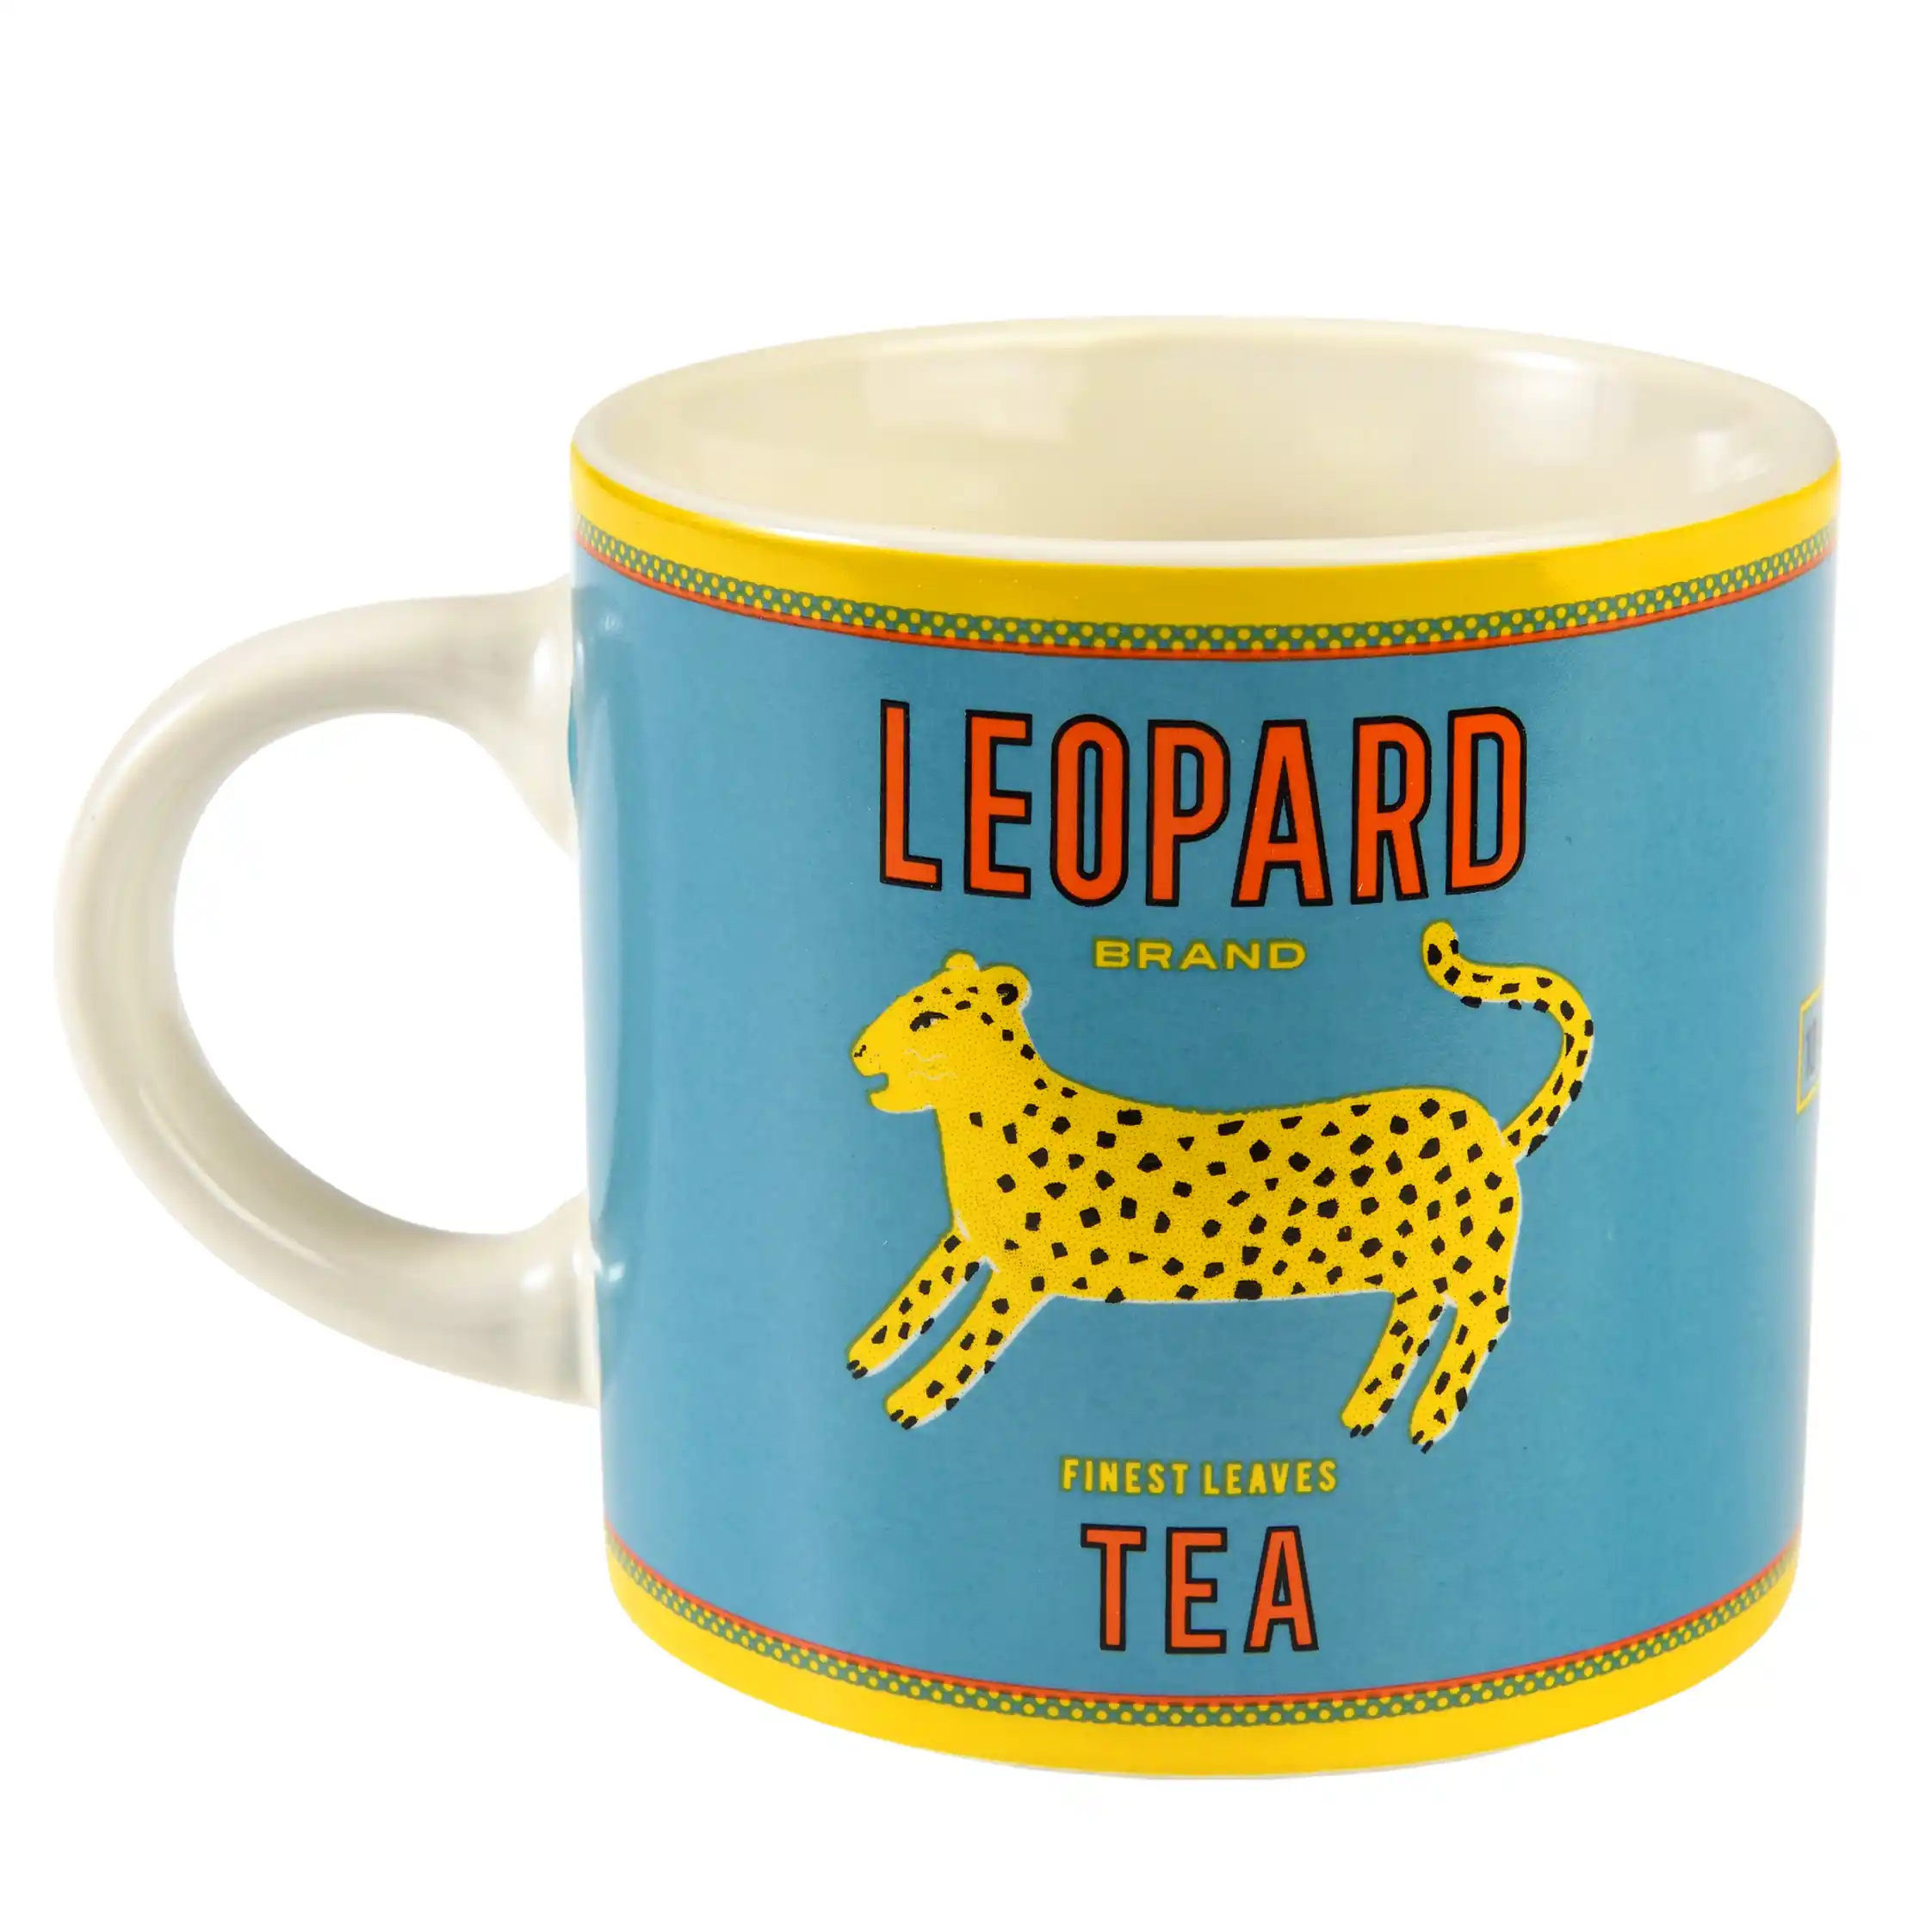 ceramic mug - leopard